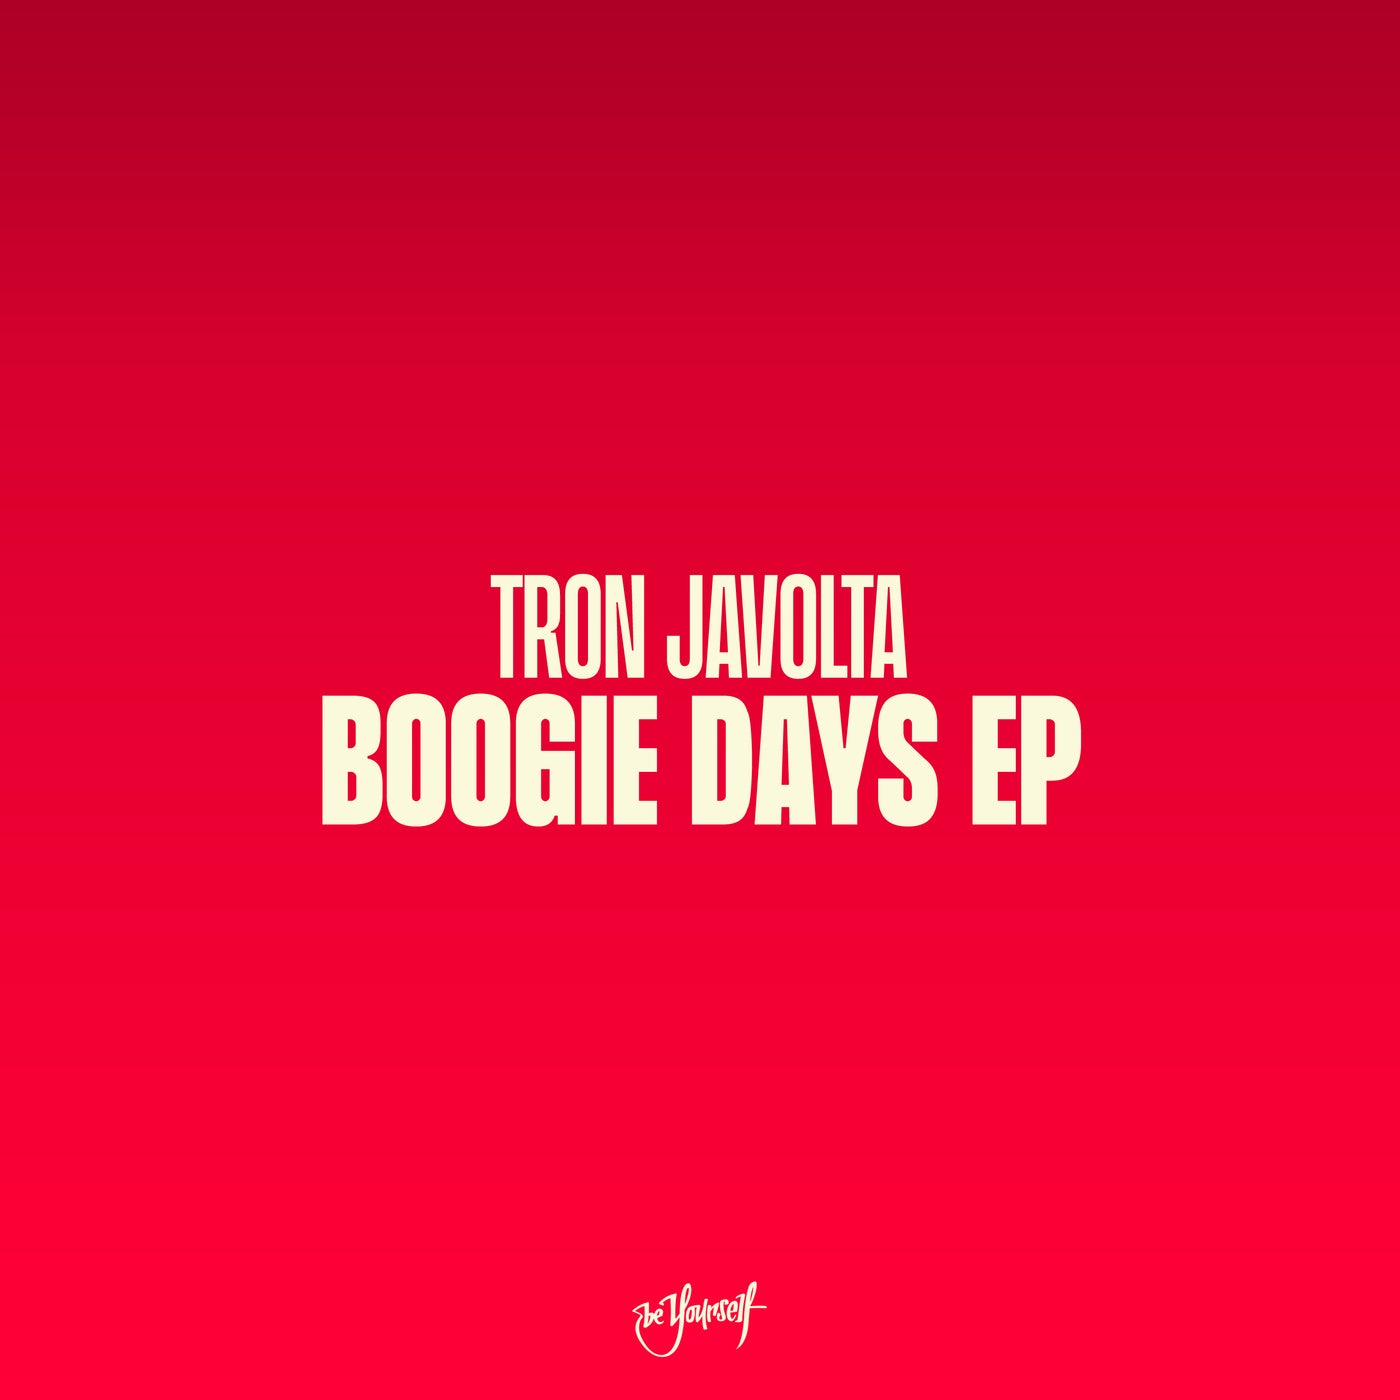 Boogie Days EP